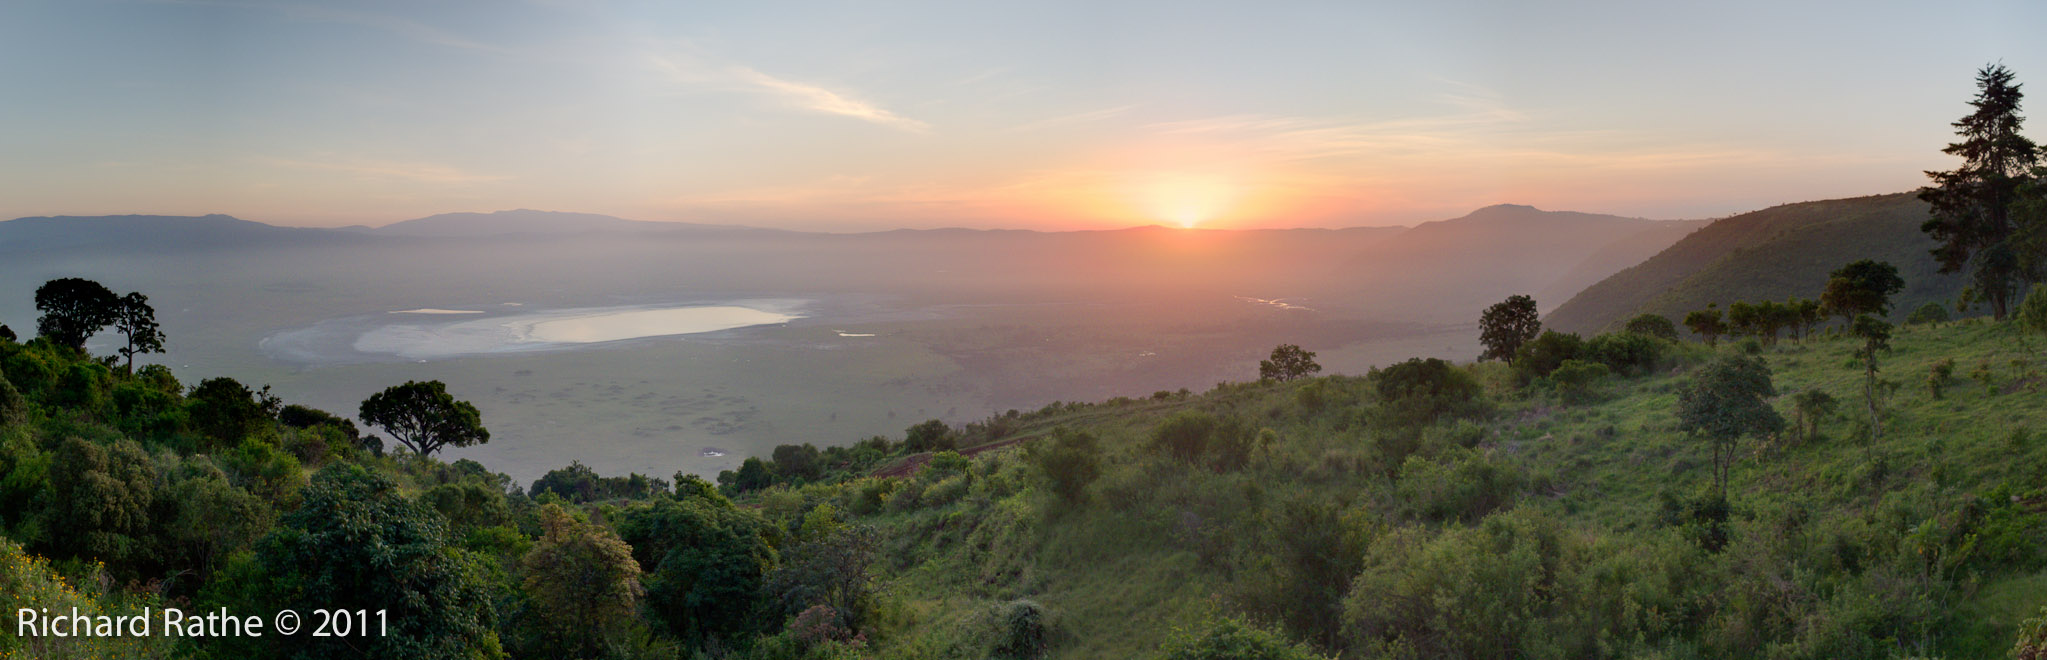 Ngorongoro Crater Sunset from Lodge (cropped)